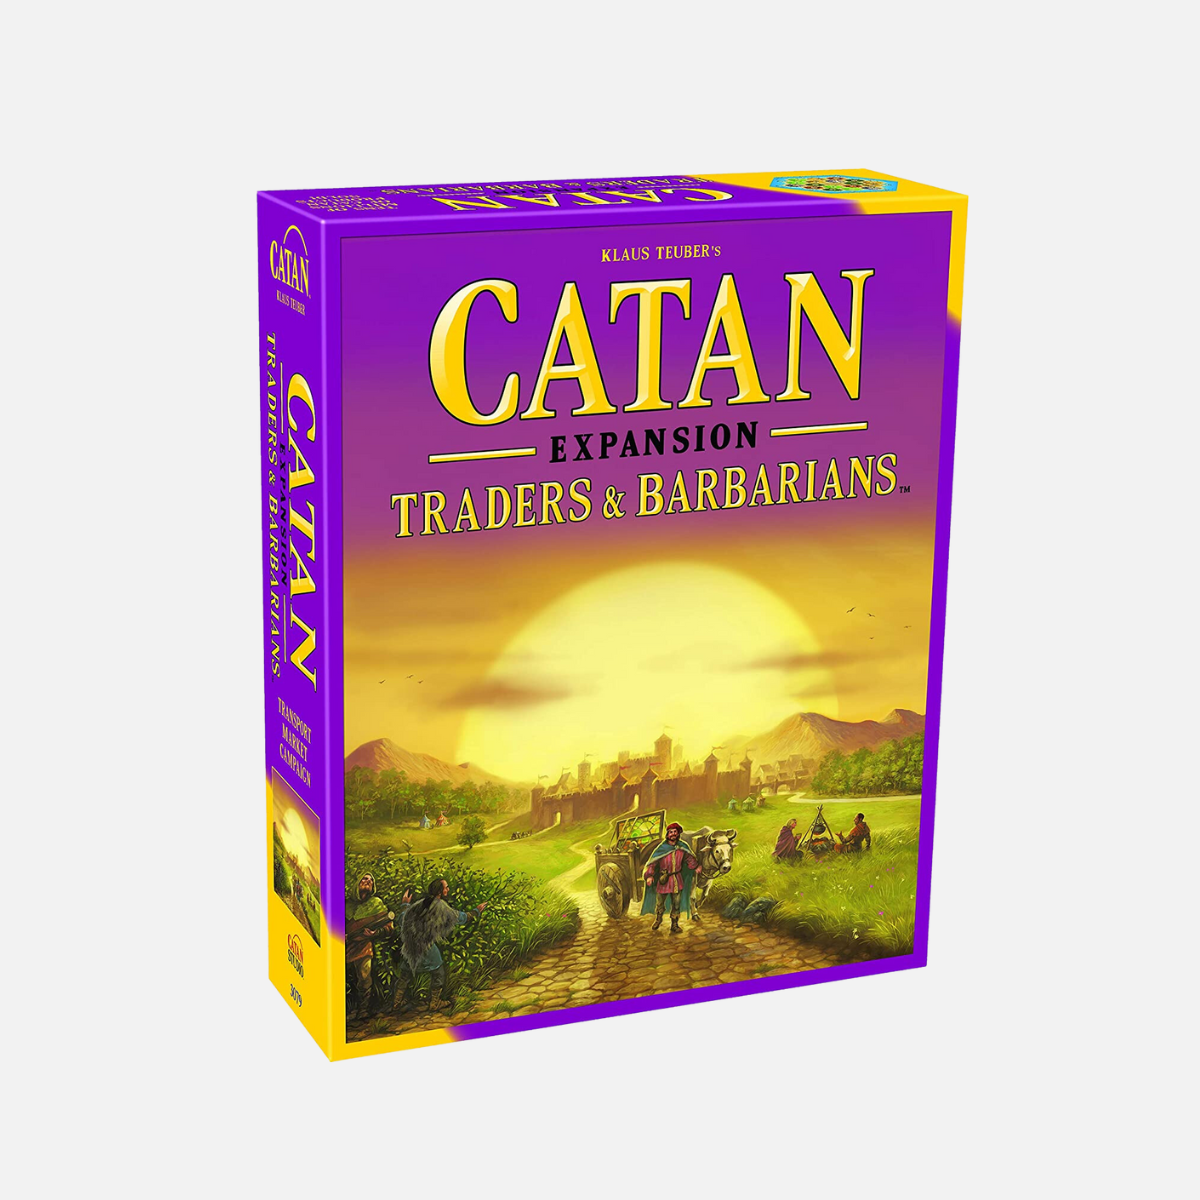 Catan Traders & Barbarians 5th Edition board game